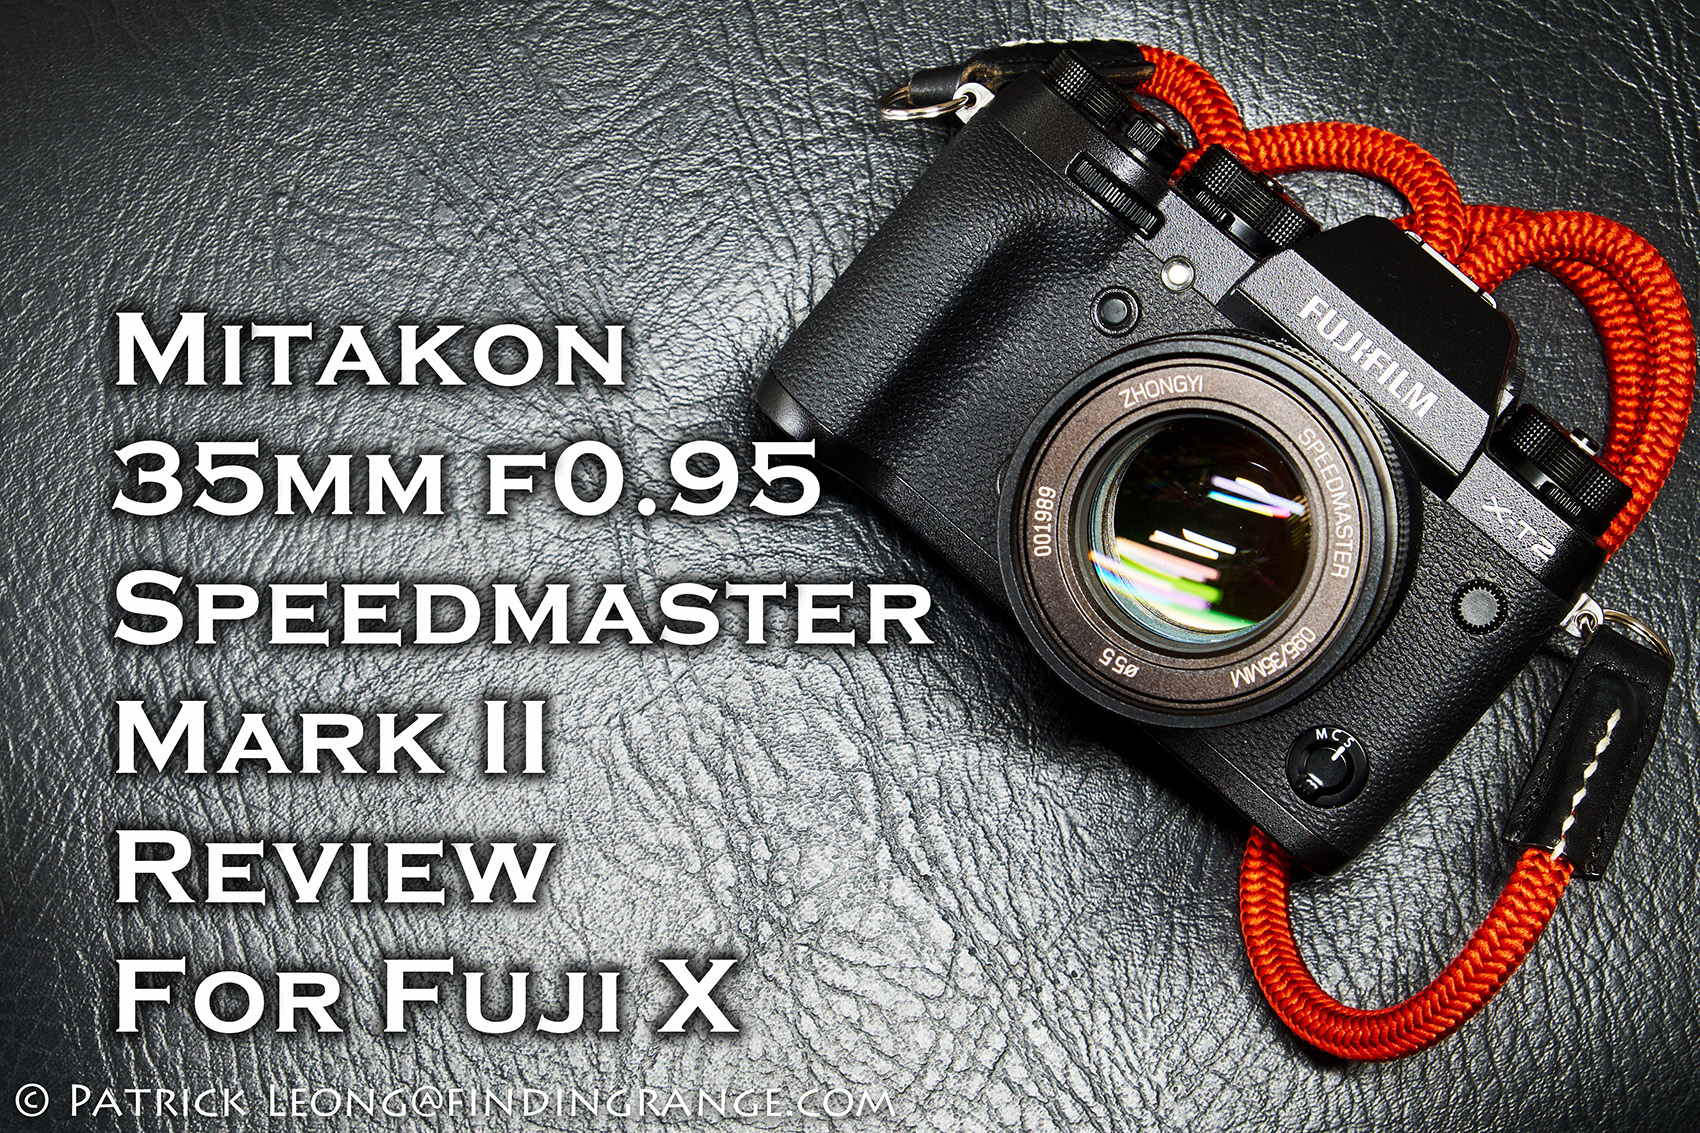 Inhalen investering wanhoop Mitakon 35mm f0.95 Speedmaster Mark II Review For Fuji X